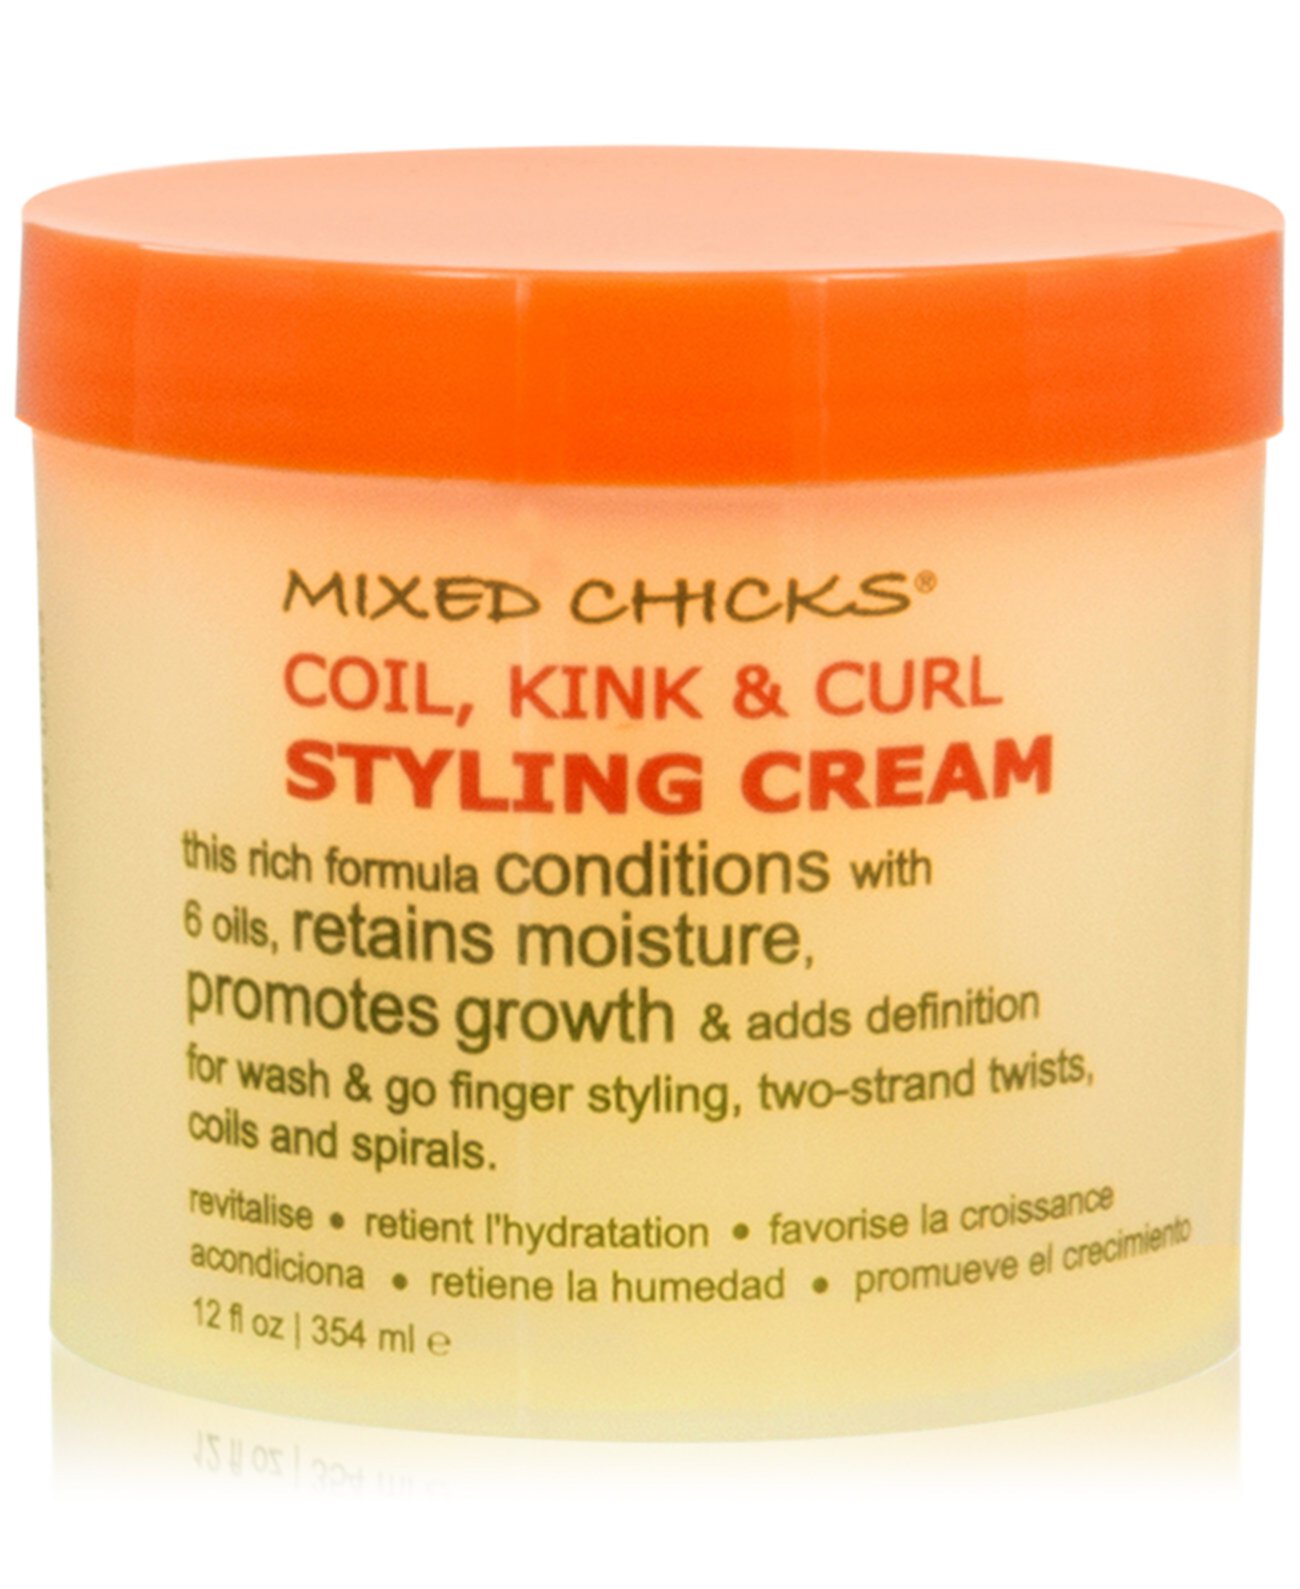 Крем для укладки волос Coil, Kink & Curl, 12 унций, от PUREBEAUTY Salon & Spa Mixed Chicks